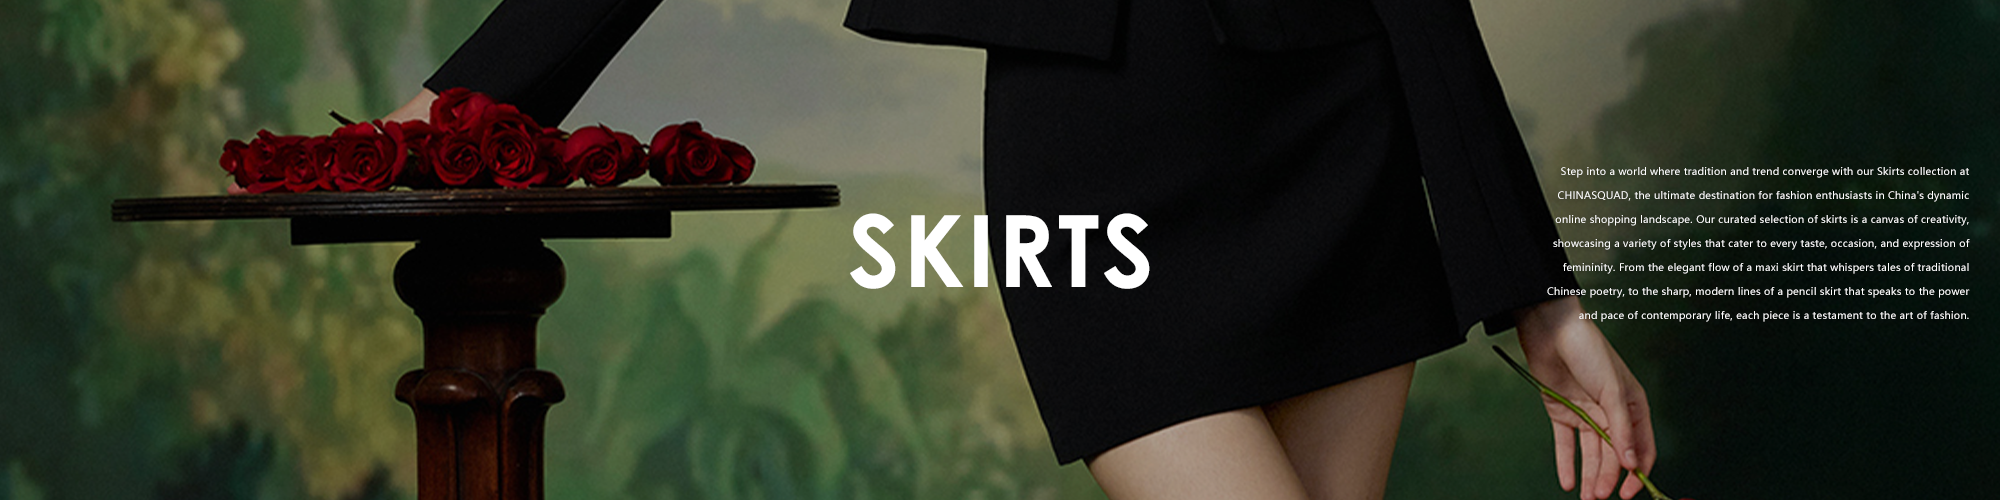 Skirts | CHINASQUAD